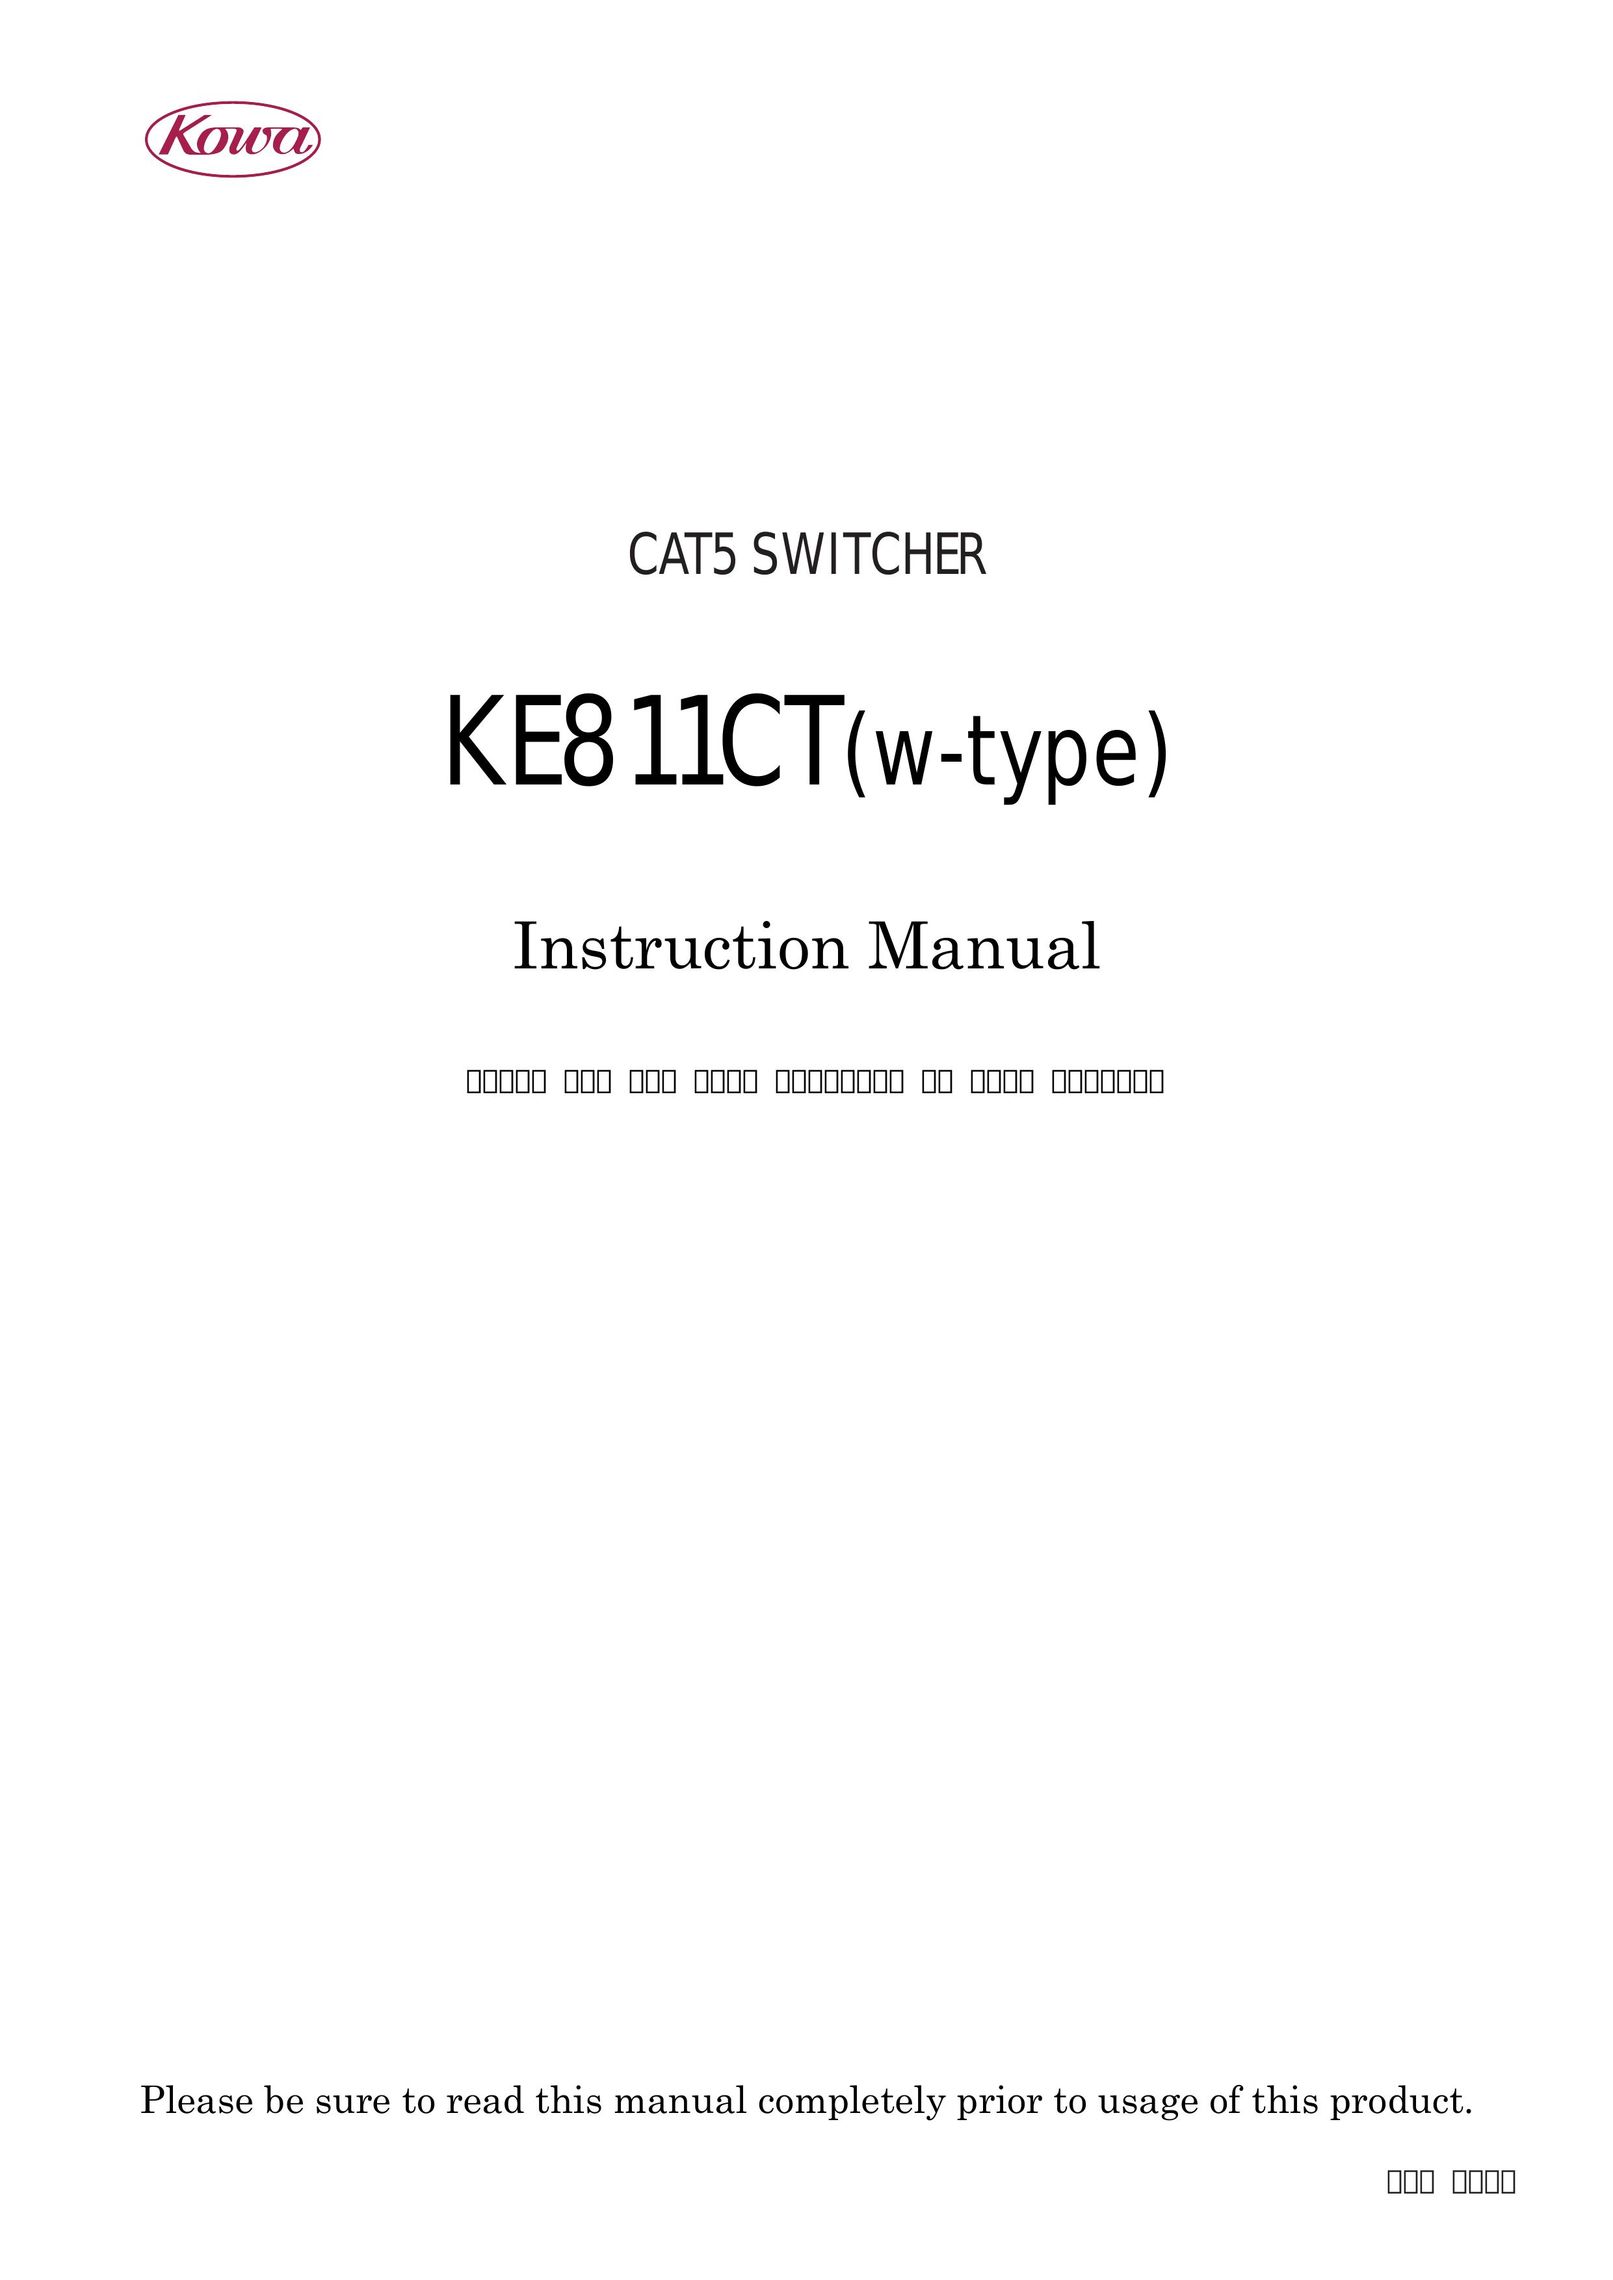 Kowa KE811CT Switch User Manual